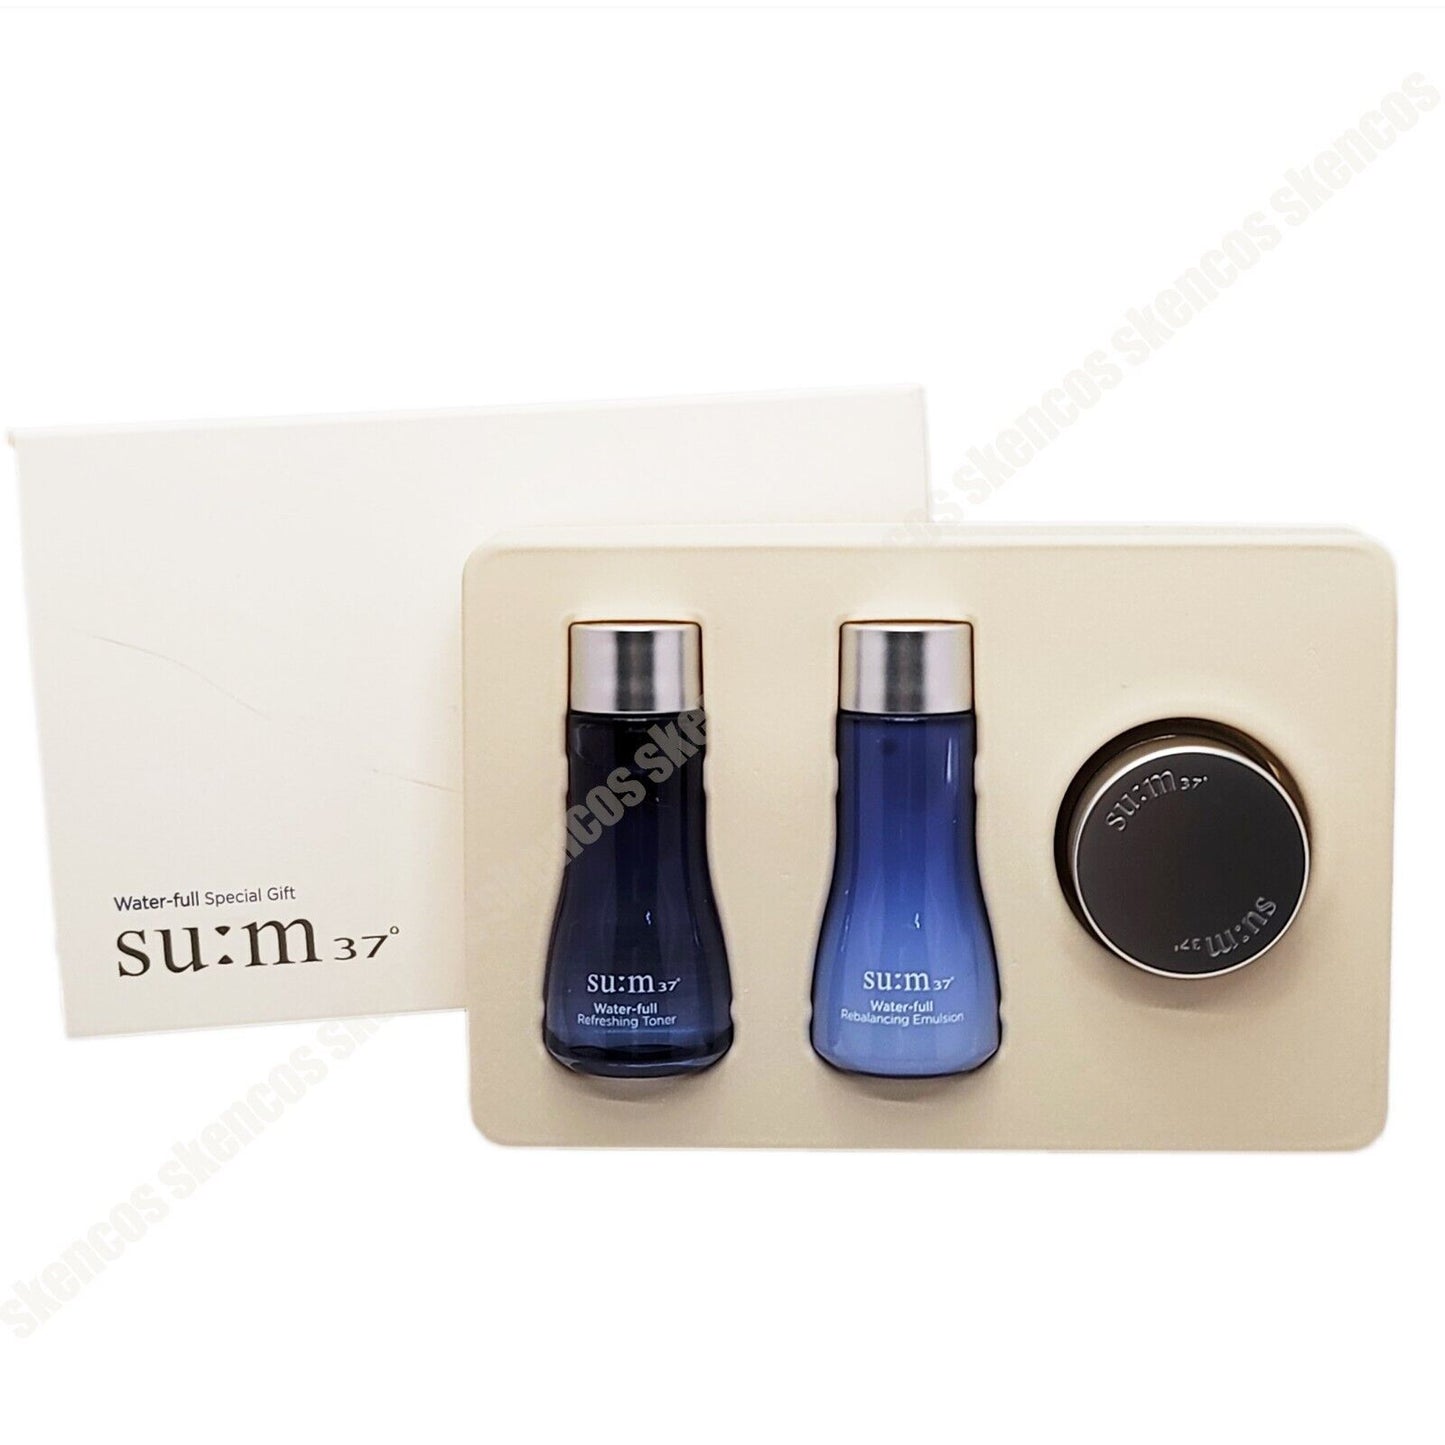 Sum 37 Water-full Marine Relief Gel Cream 50ml+3 Travel Kits/Cooling/su:m37